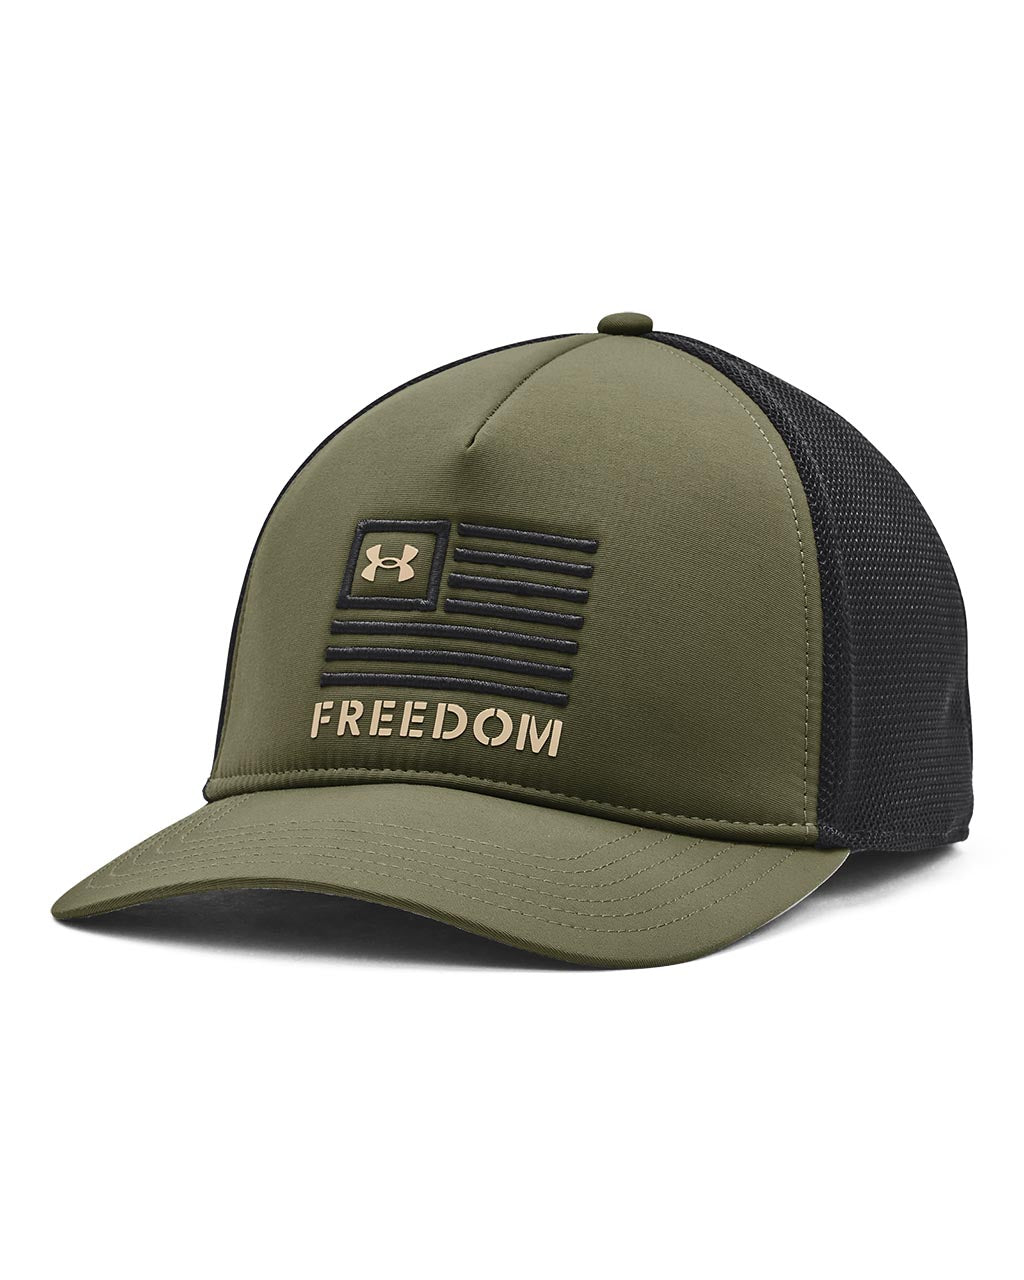 Under Armour Mens UA Freedom Trucker Cap